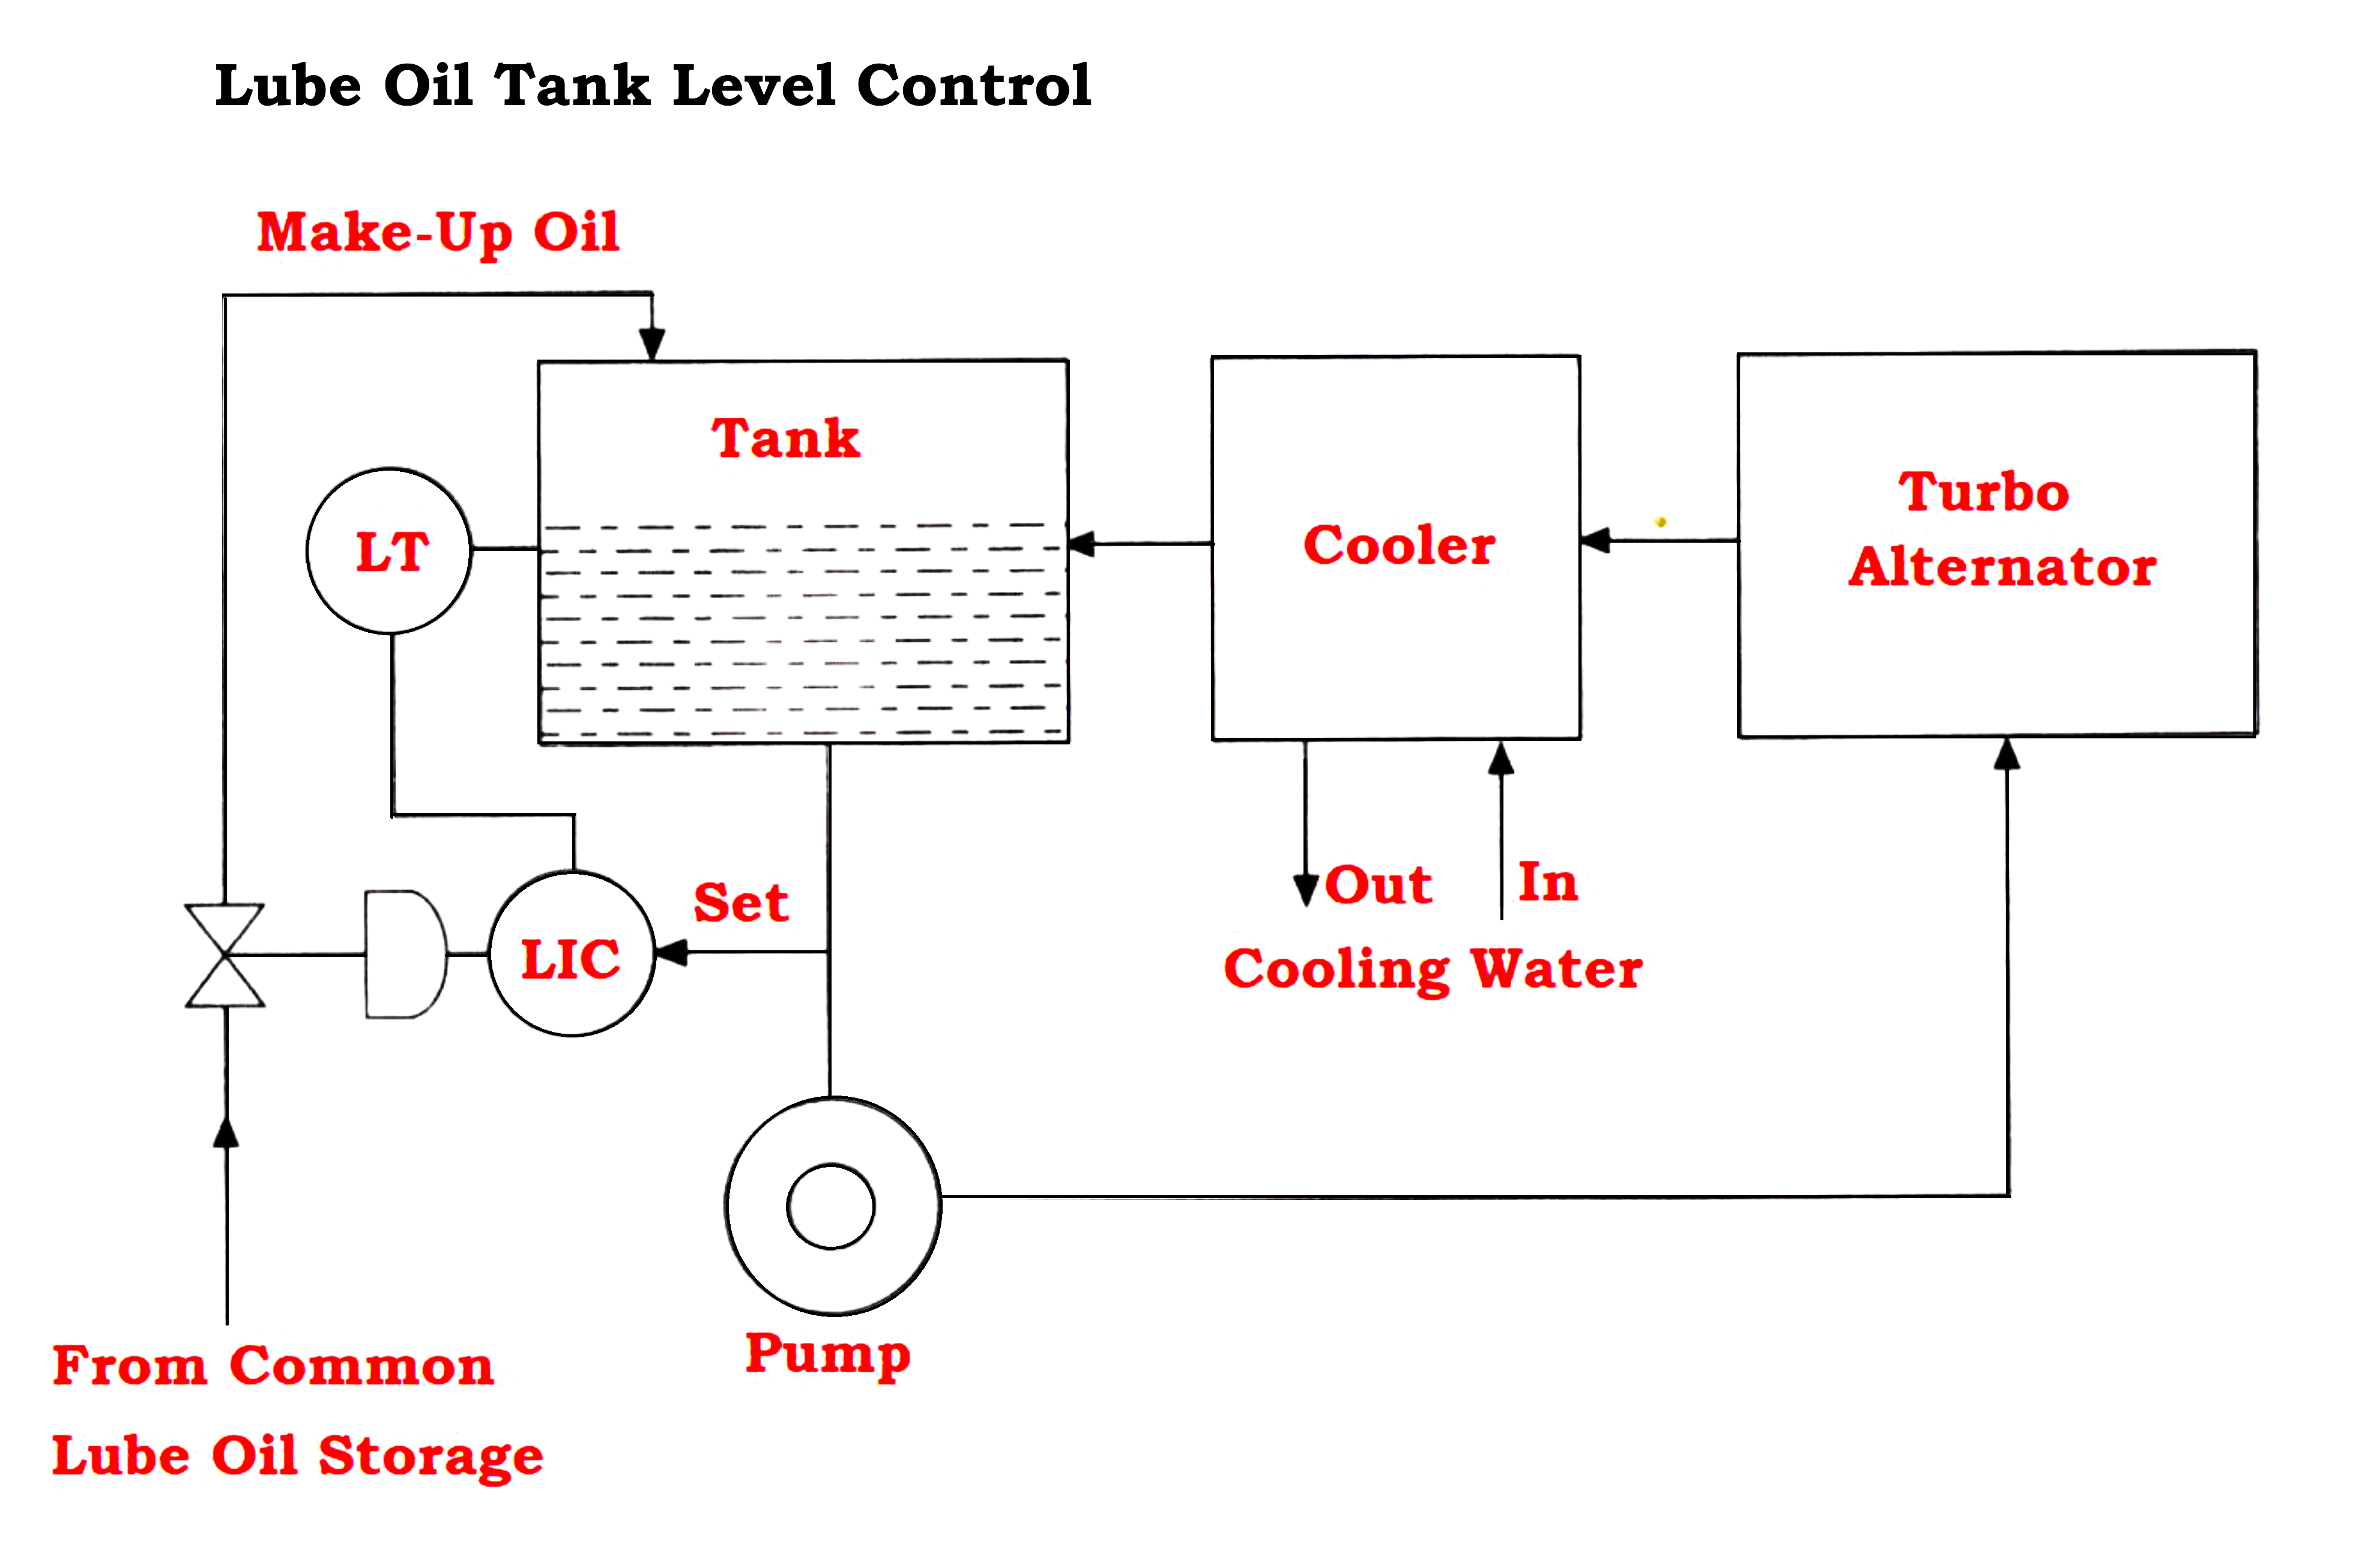 Lube Oil Tank Level Control